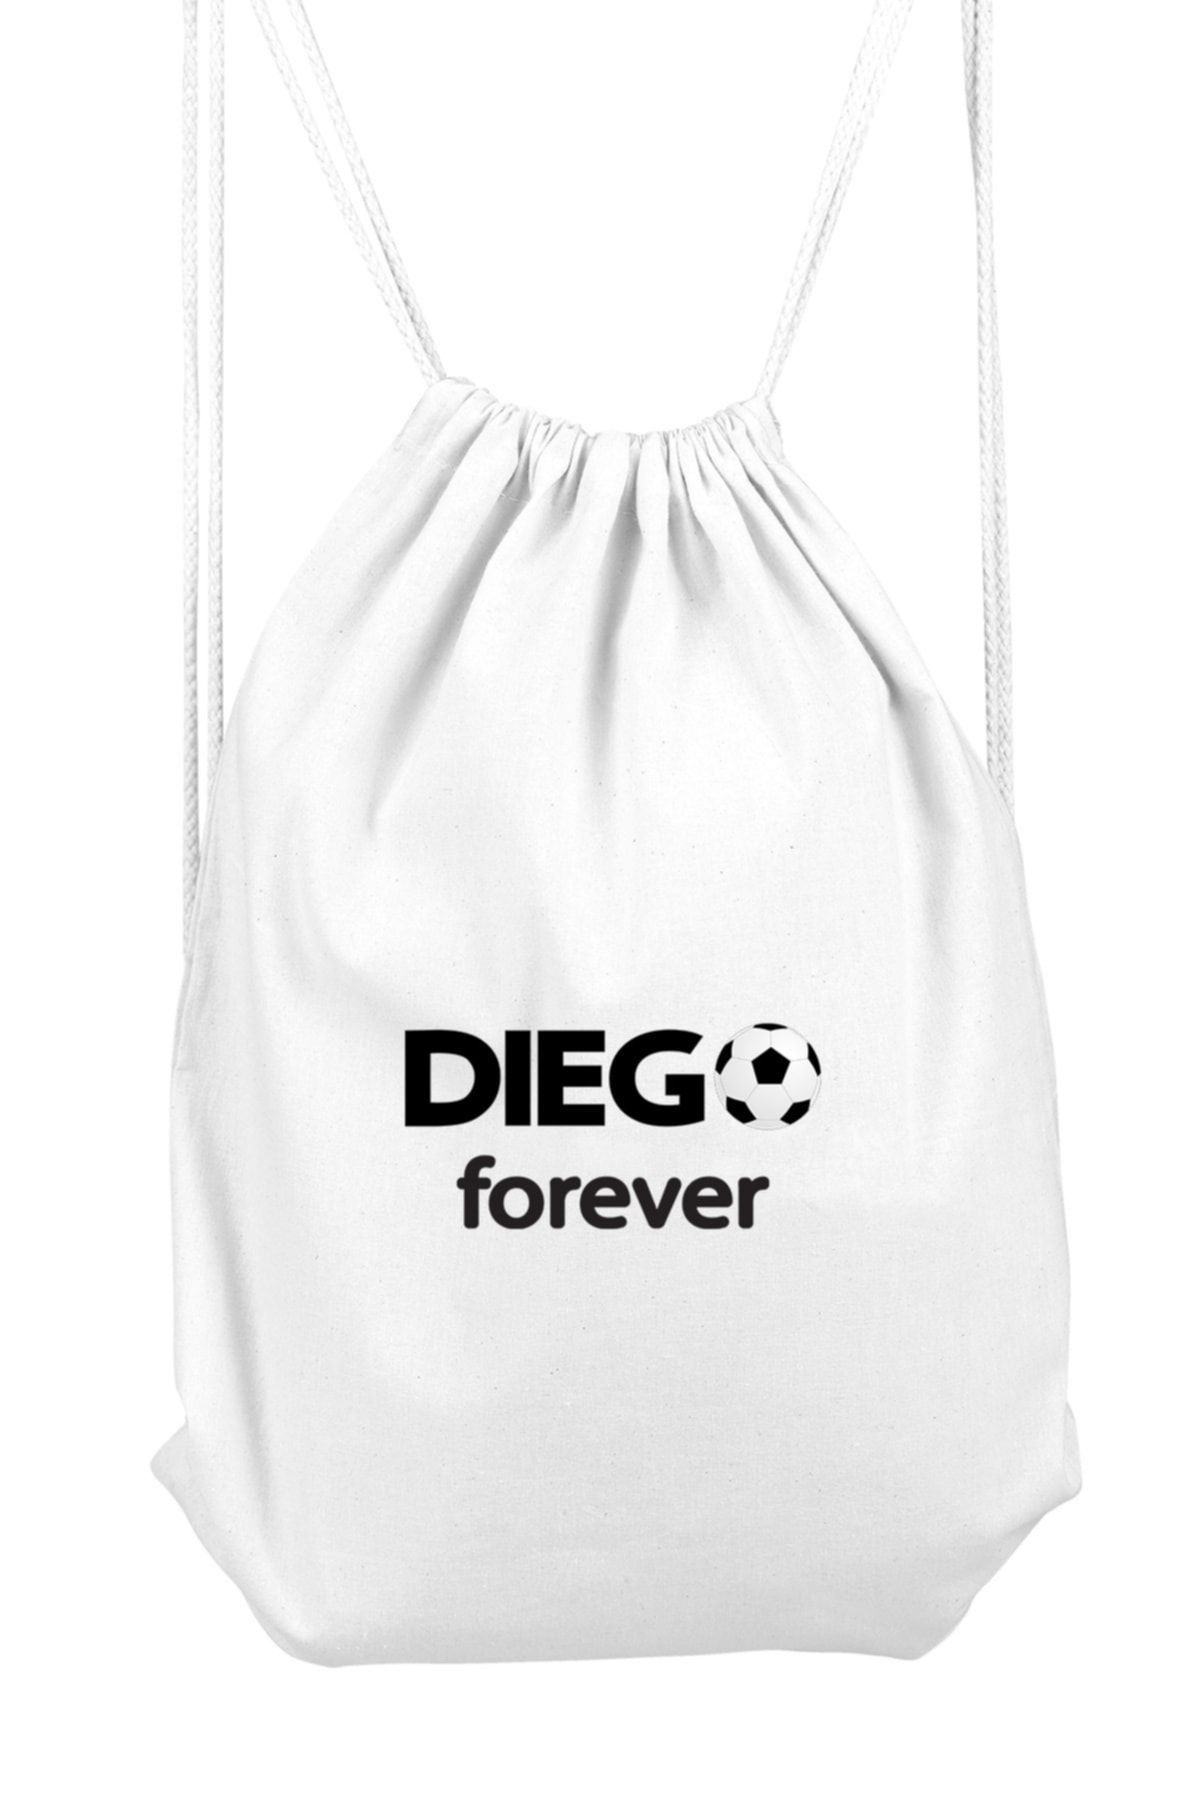 Genel Markalar Diego Forever Spor Sırt Çantası 36x50 Cm Bll1175